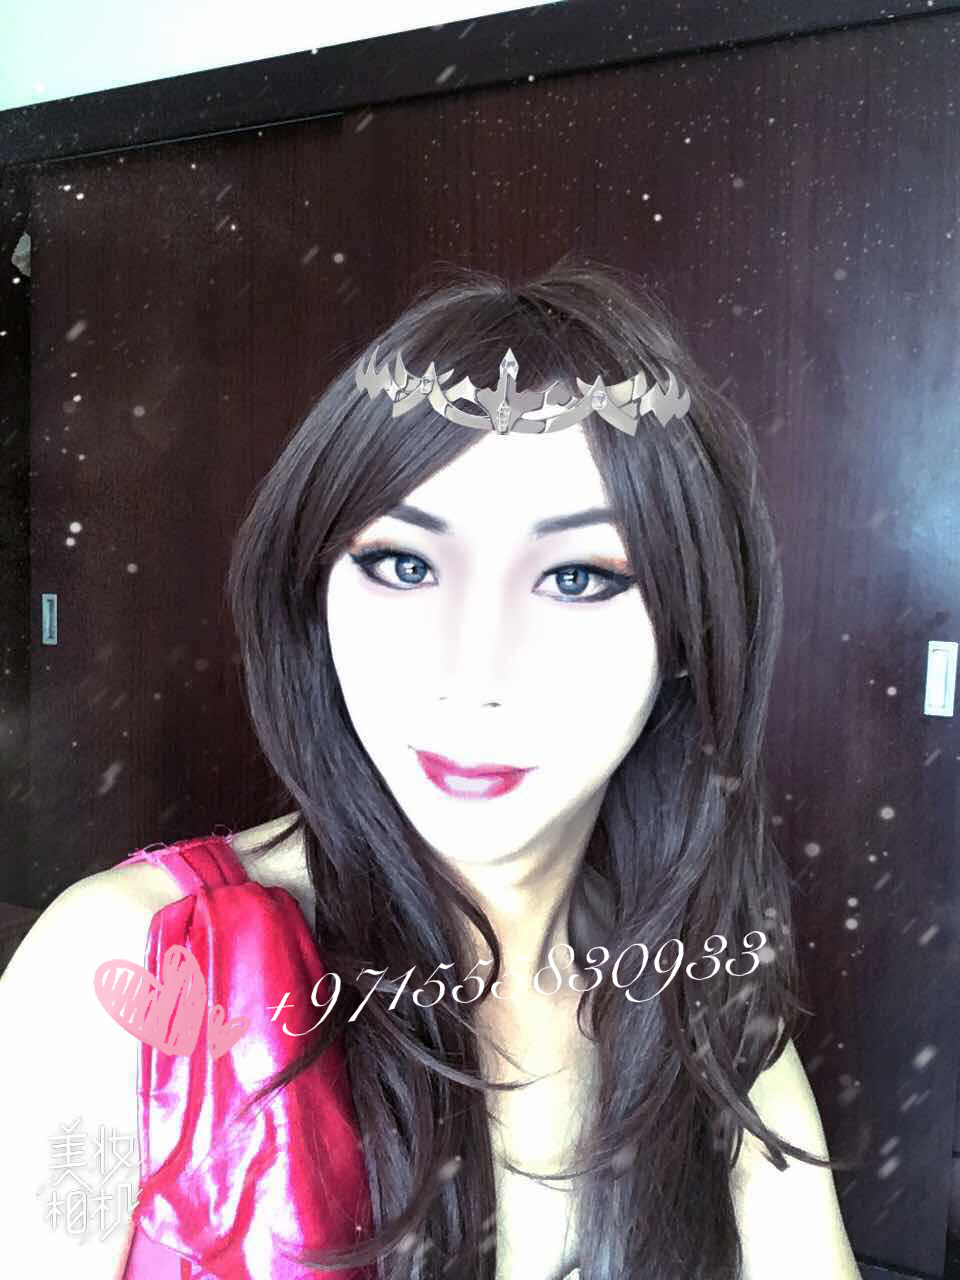 Luxury escort girl Hosaen (27yo) Mistress Hamilton